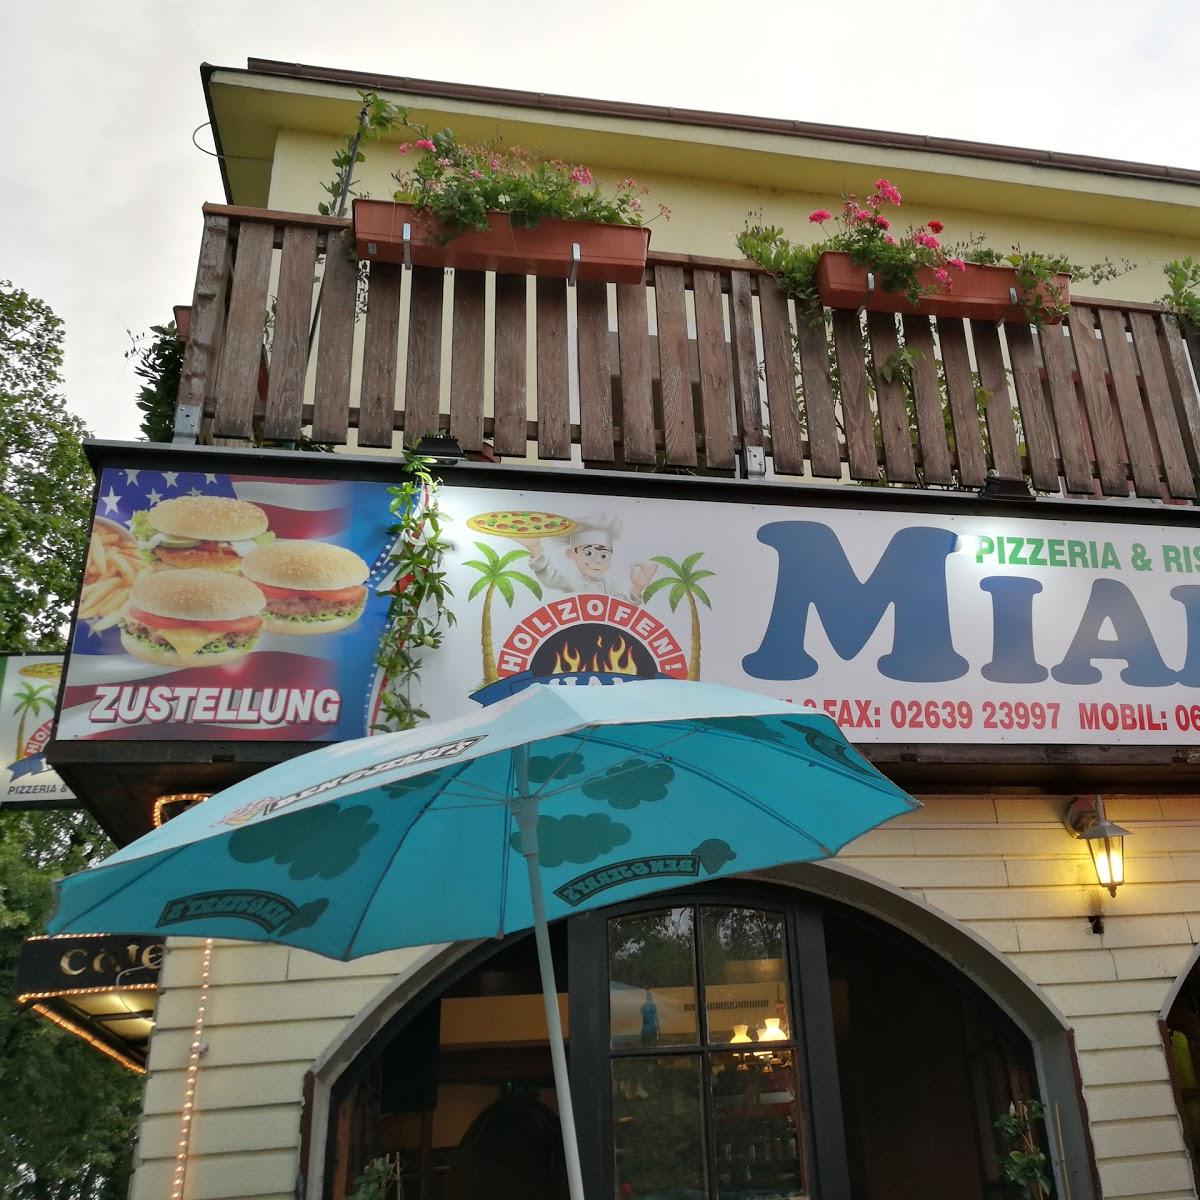 Restaurant "Pizzeria Miami" in Bad Fischau